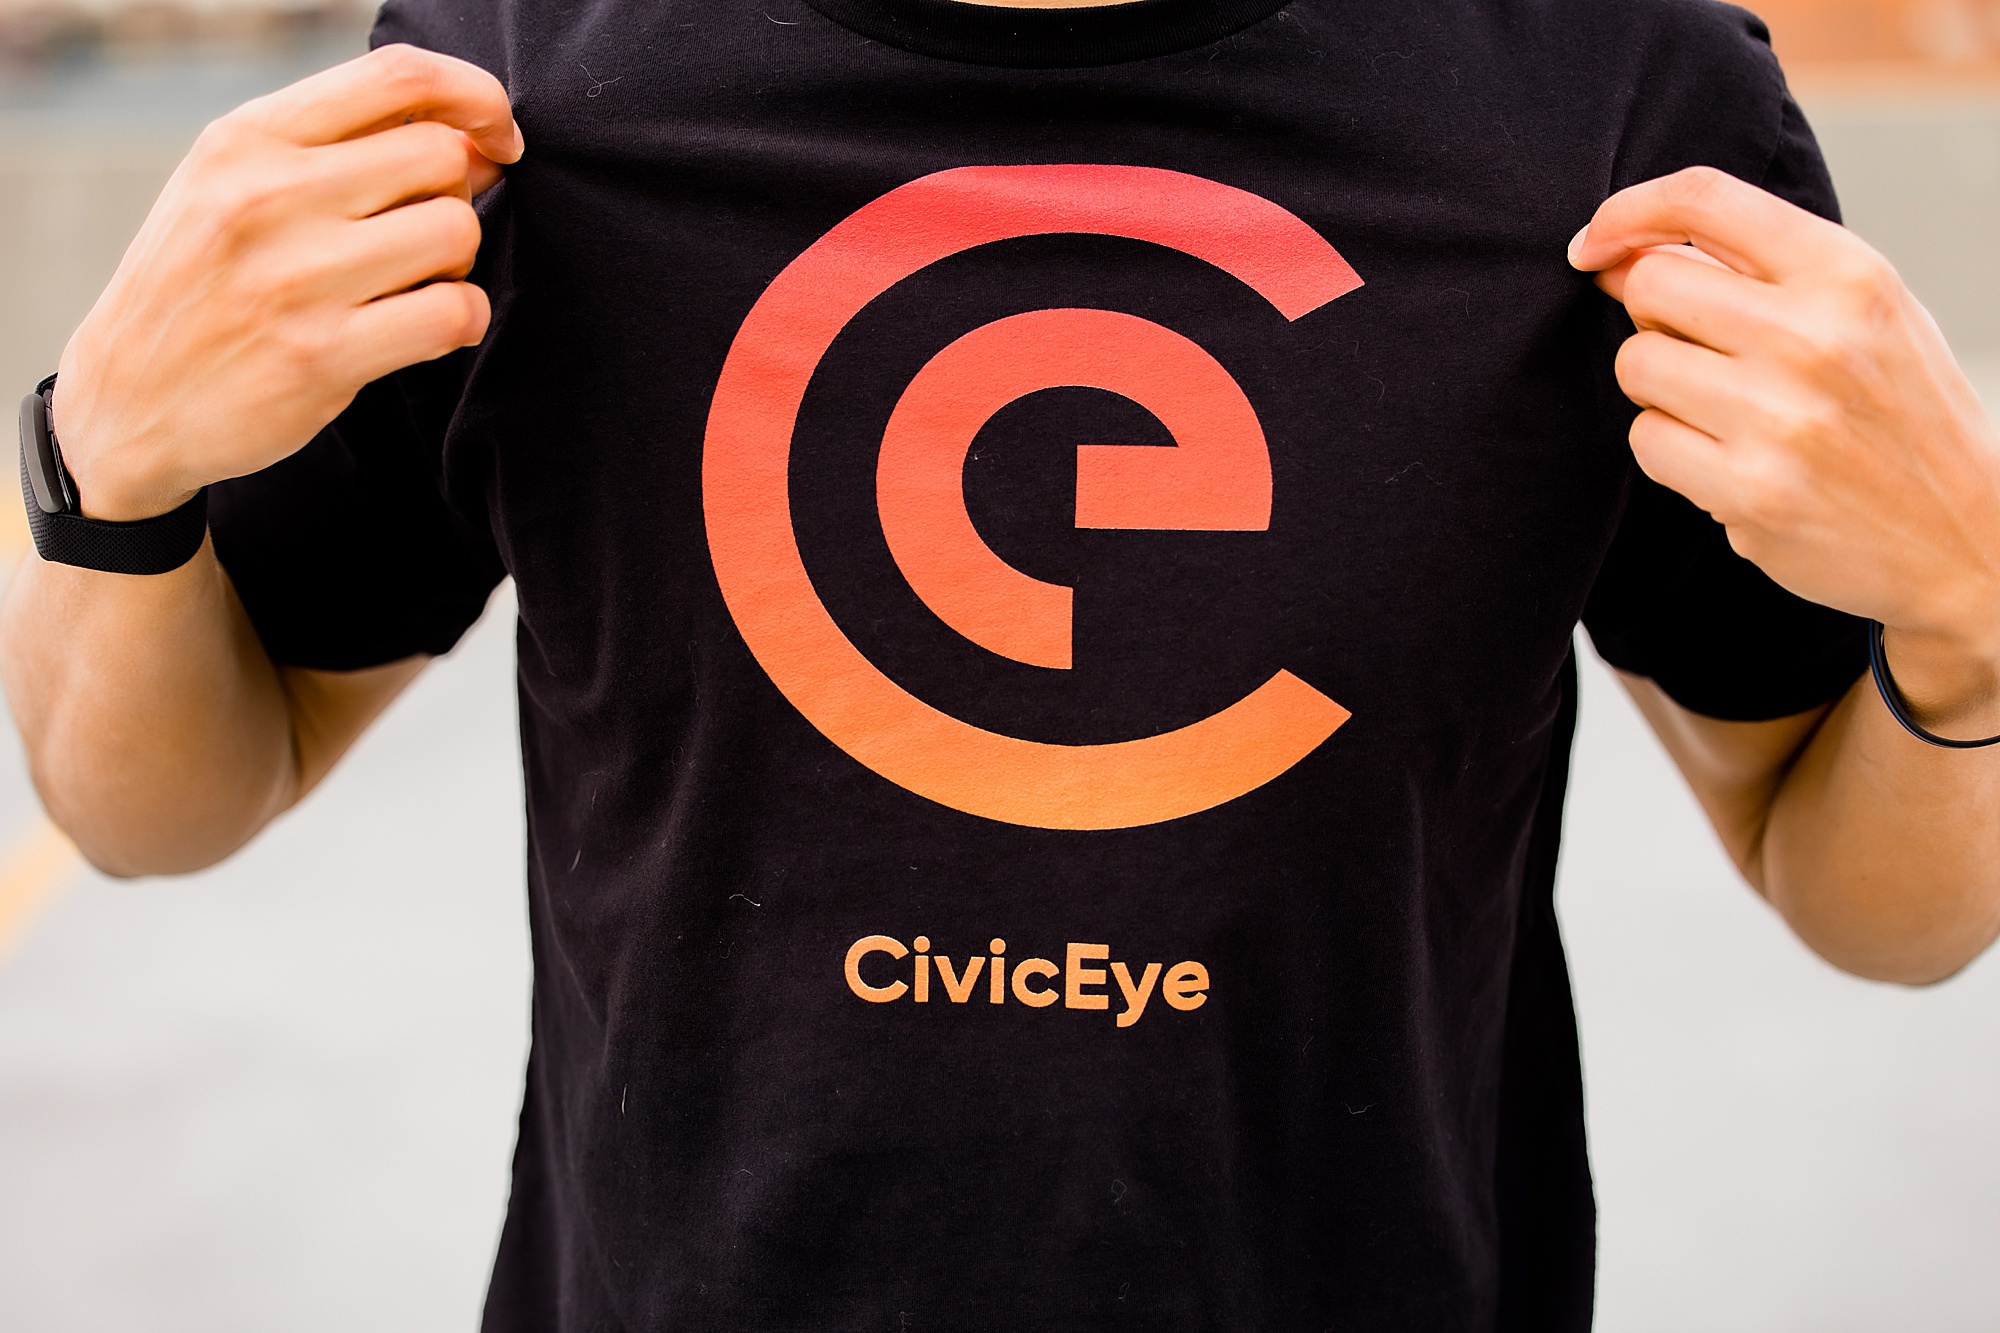 man shows off CivicEye logo during Charlotte headshots